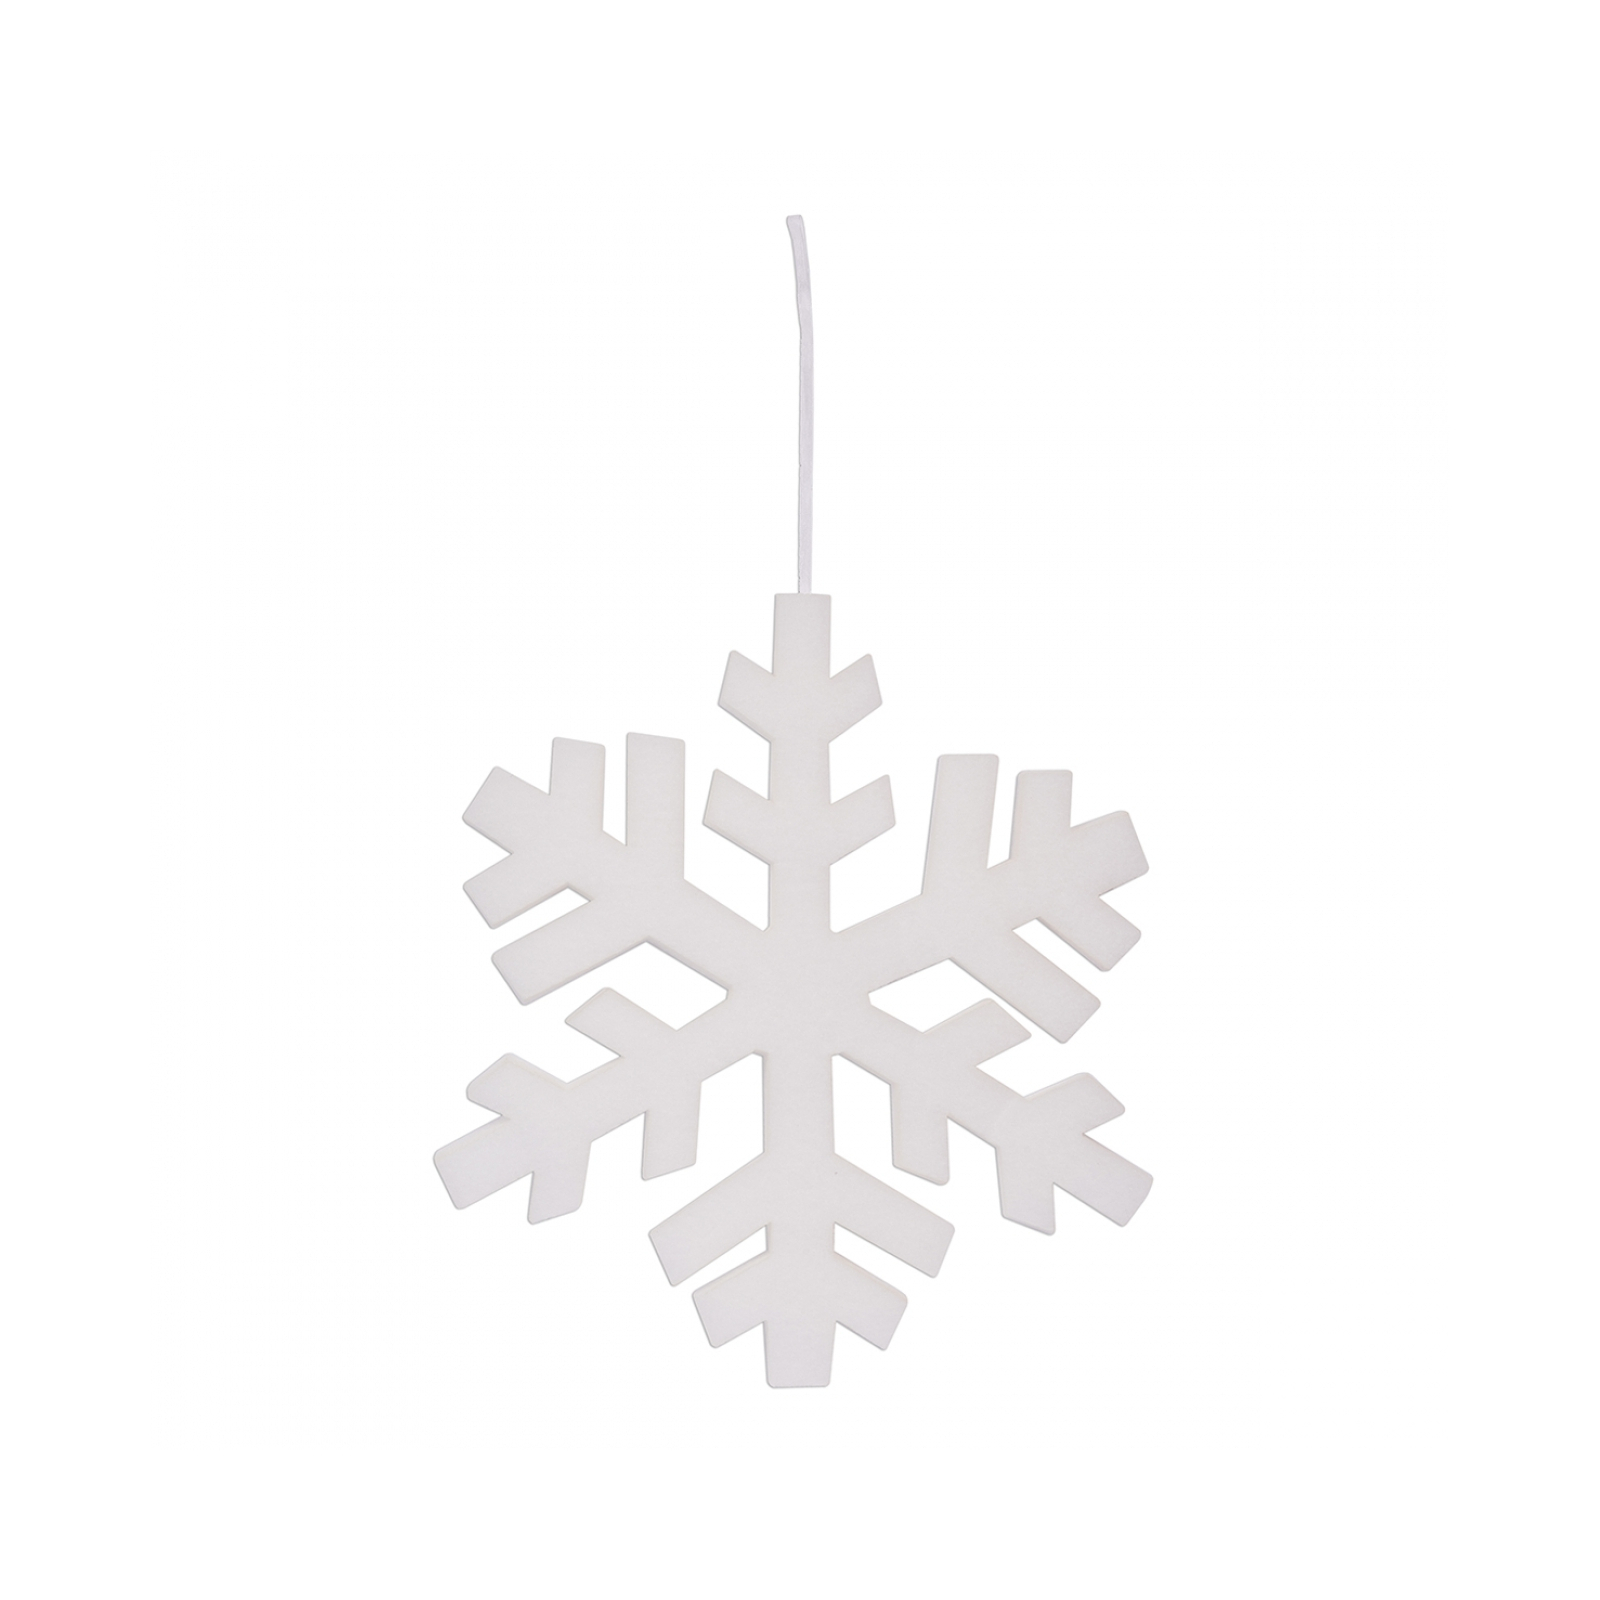 Украшение декоративное Novogod`ko сніжинка, біла, поліестер, 50 cм (974203)